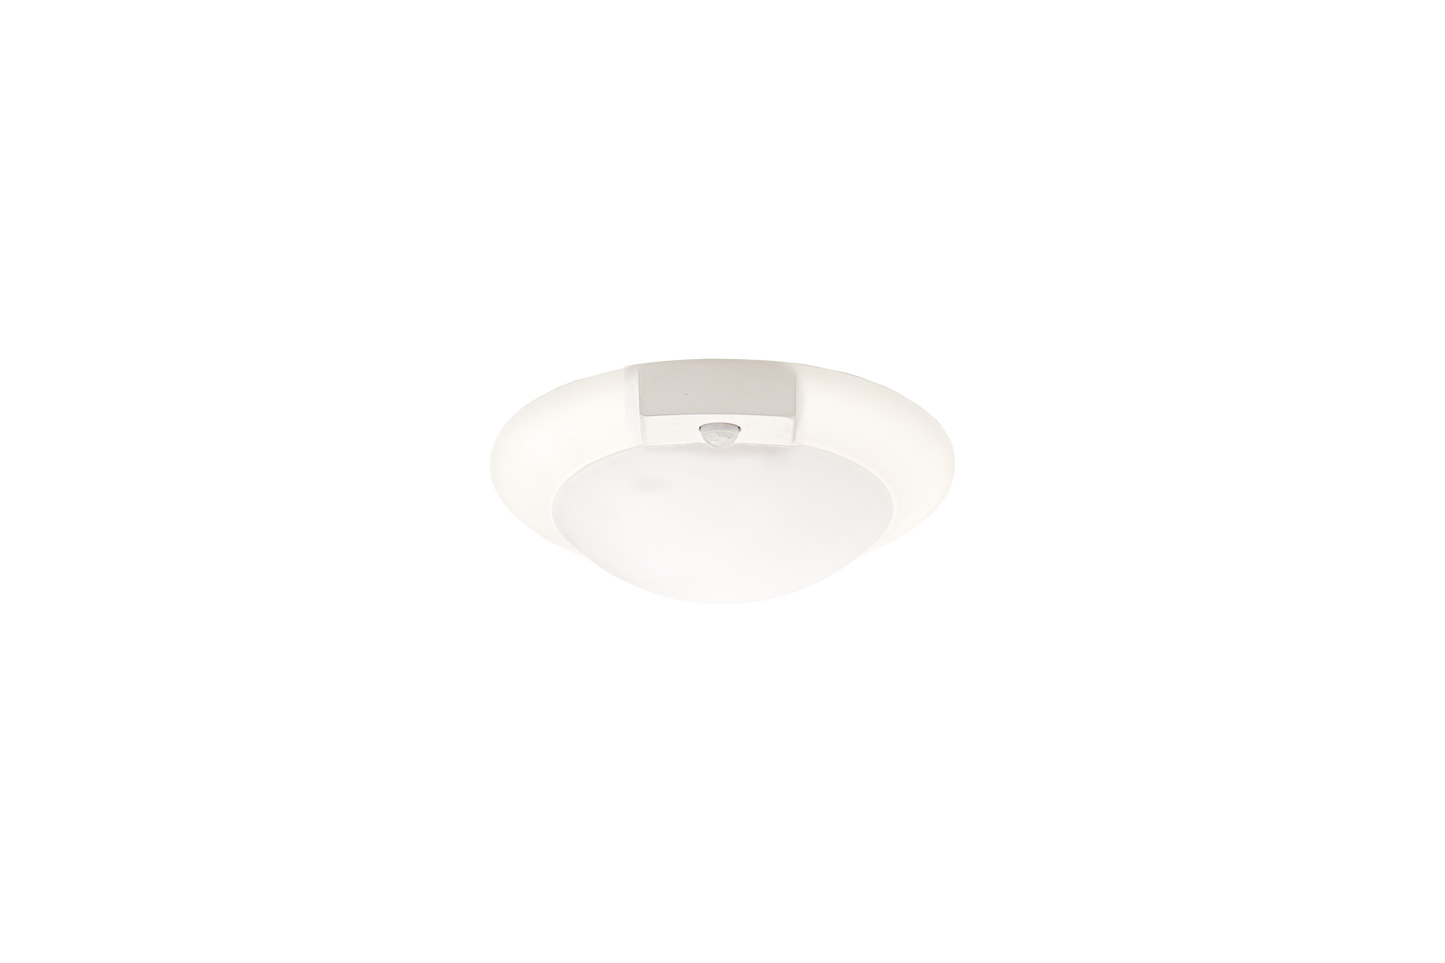 WESTGATE LED Round Disk Light with Occupancy Sensor